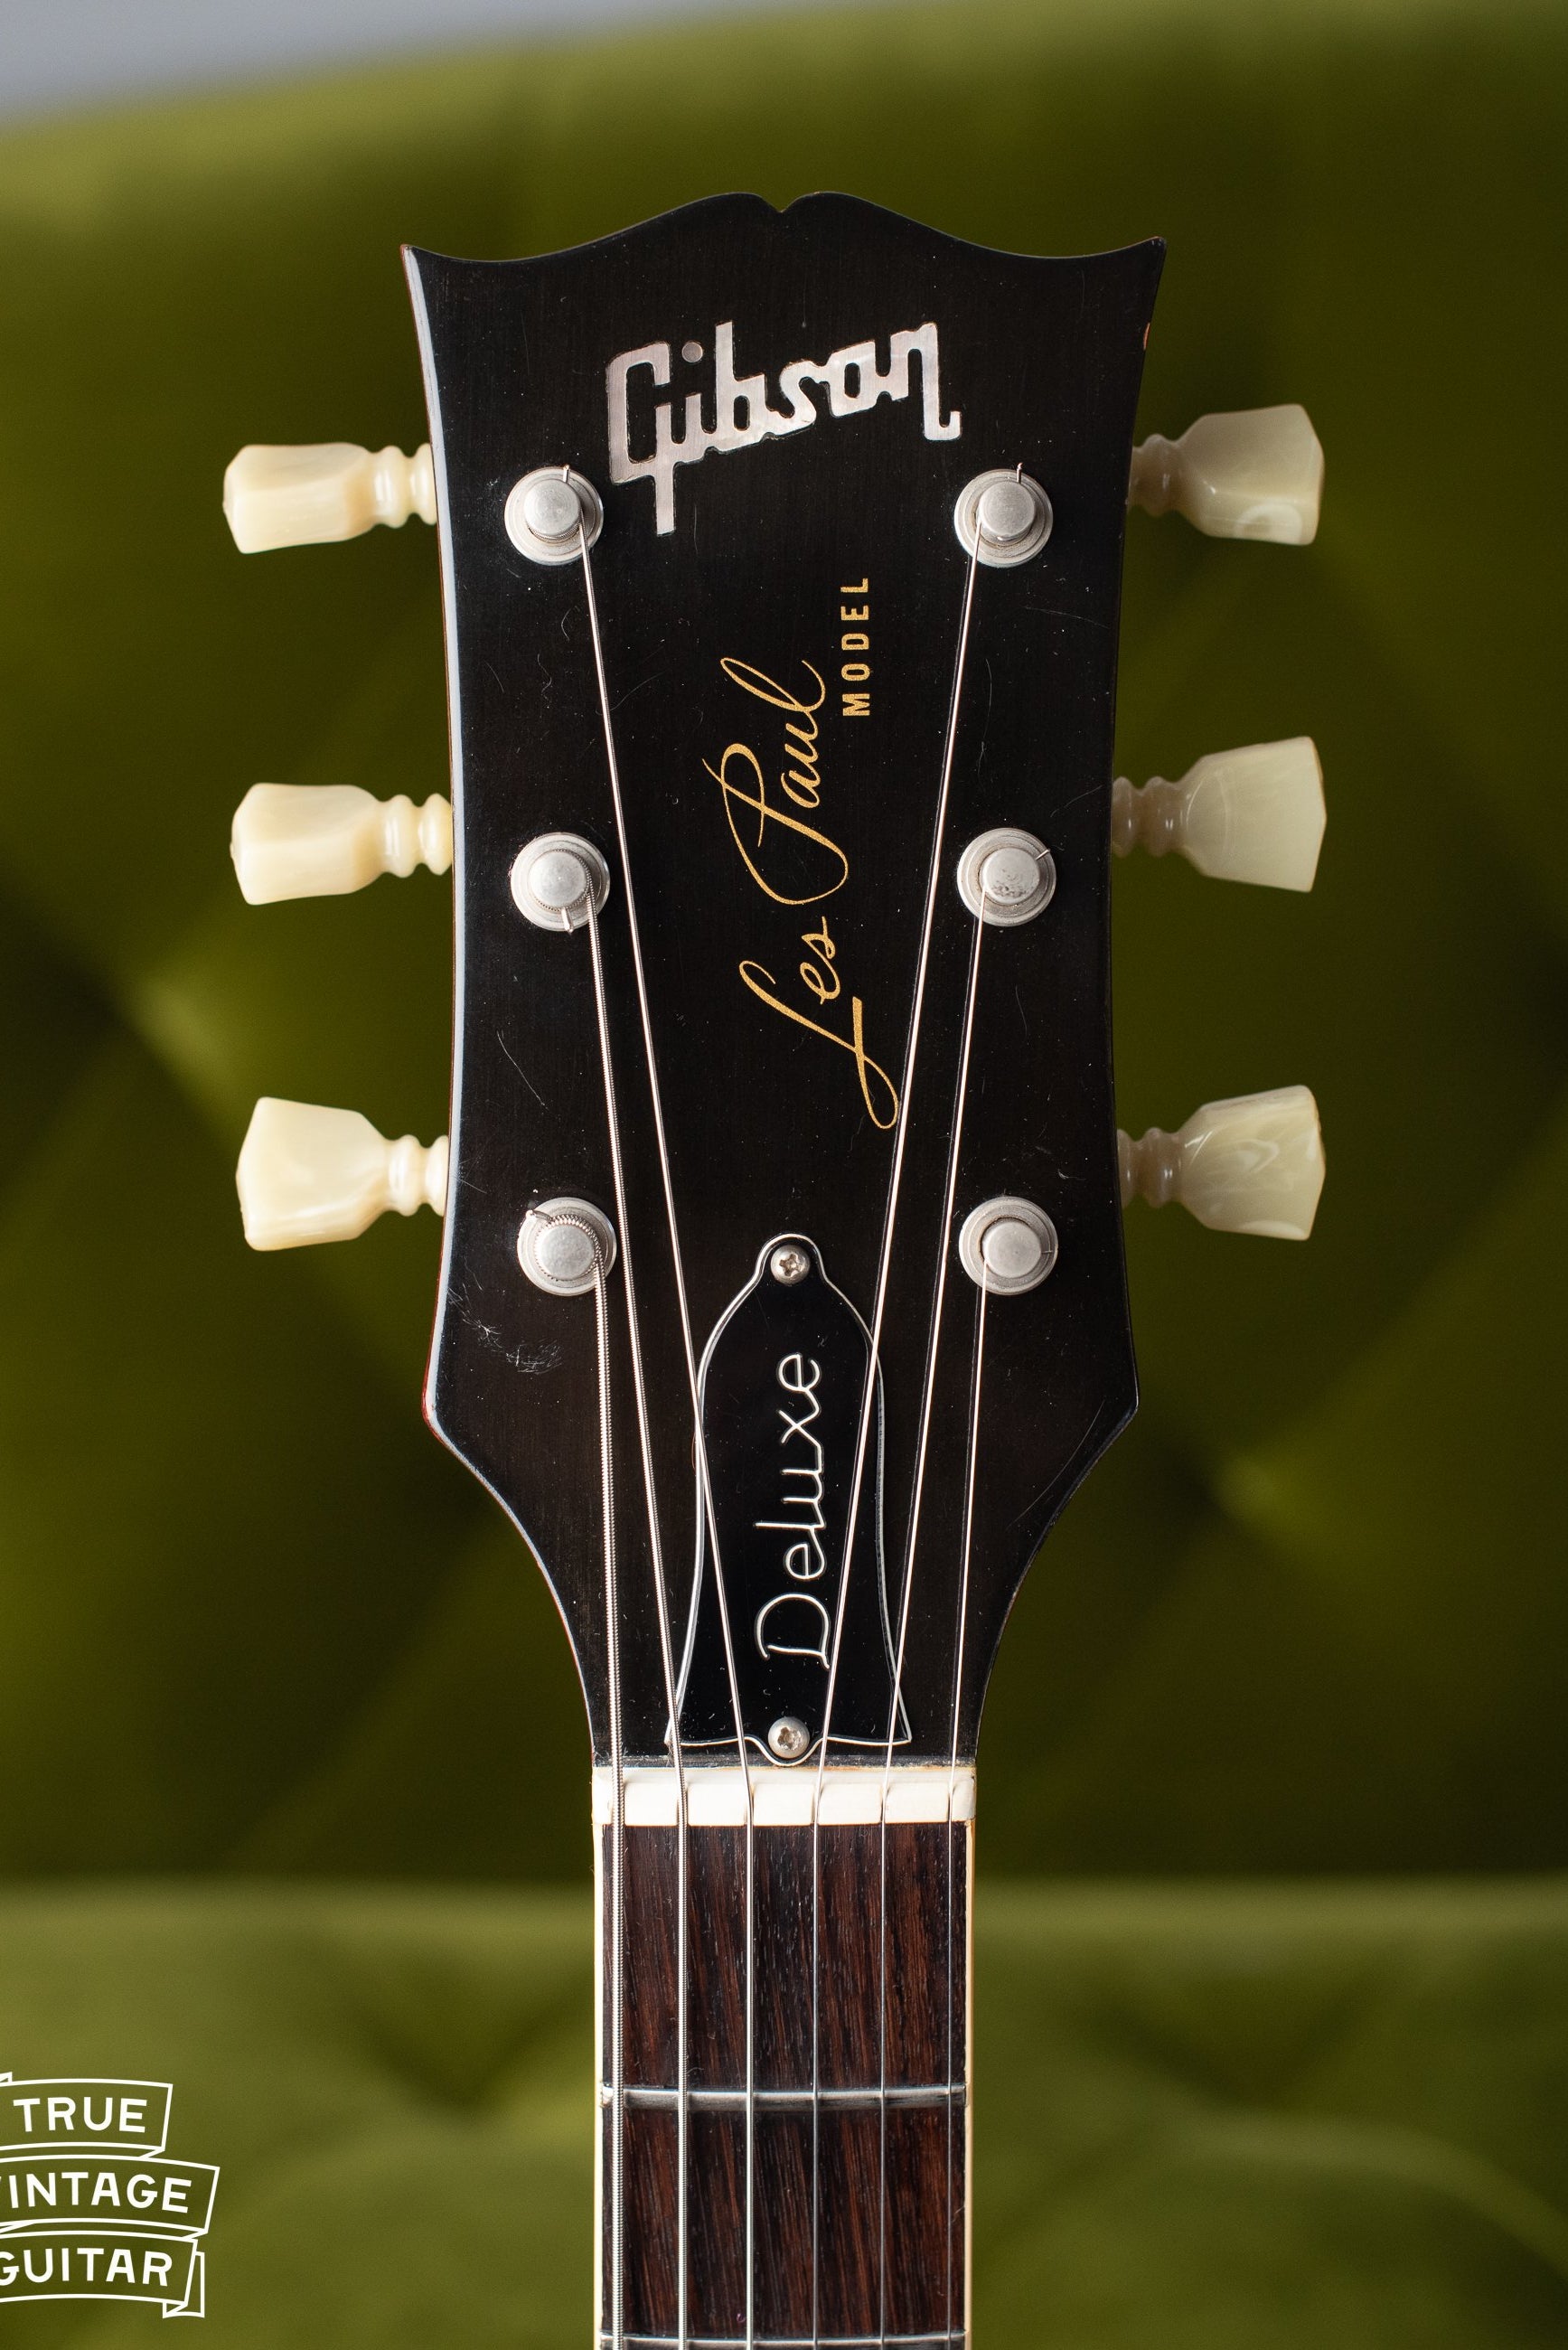 1970 Gibson Les Paul Deluxe headstock